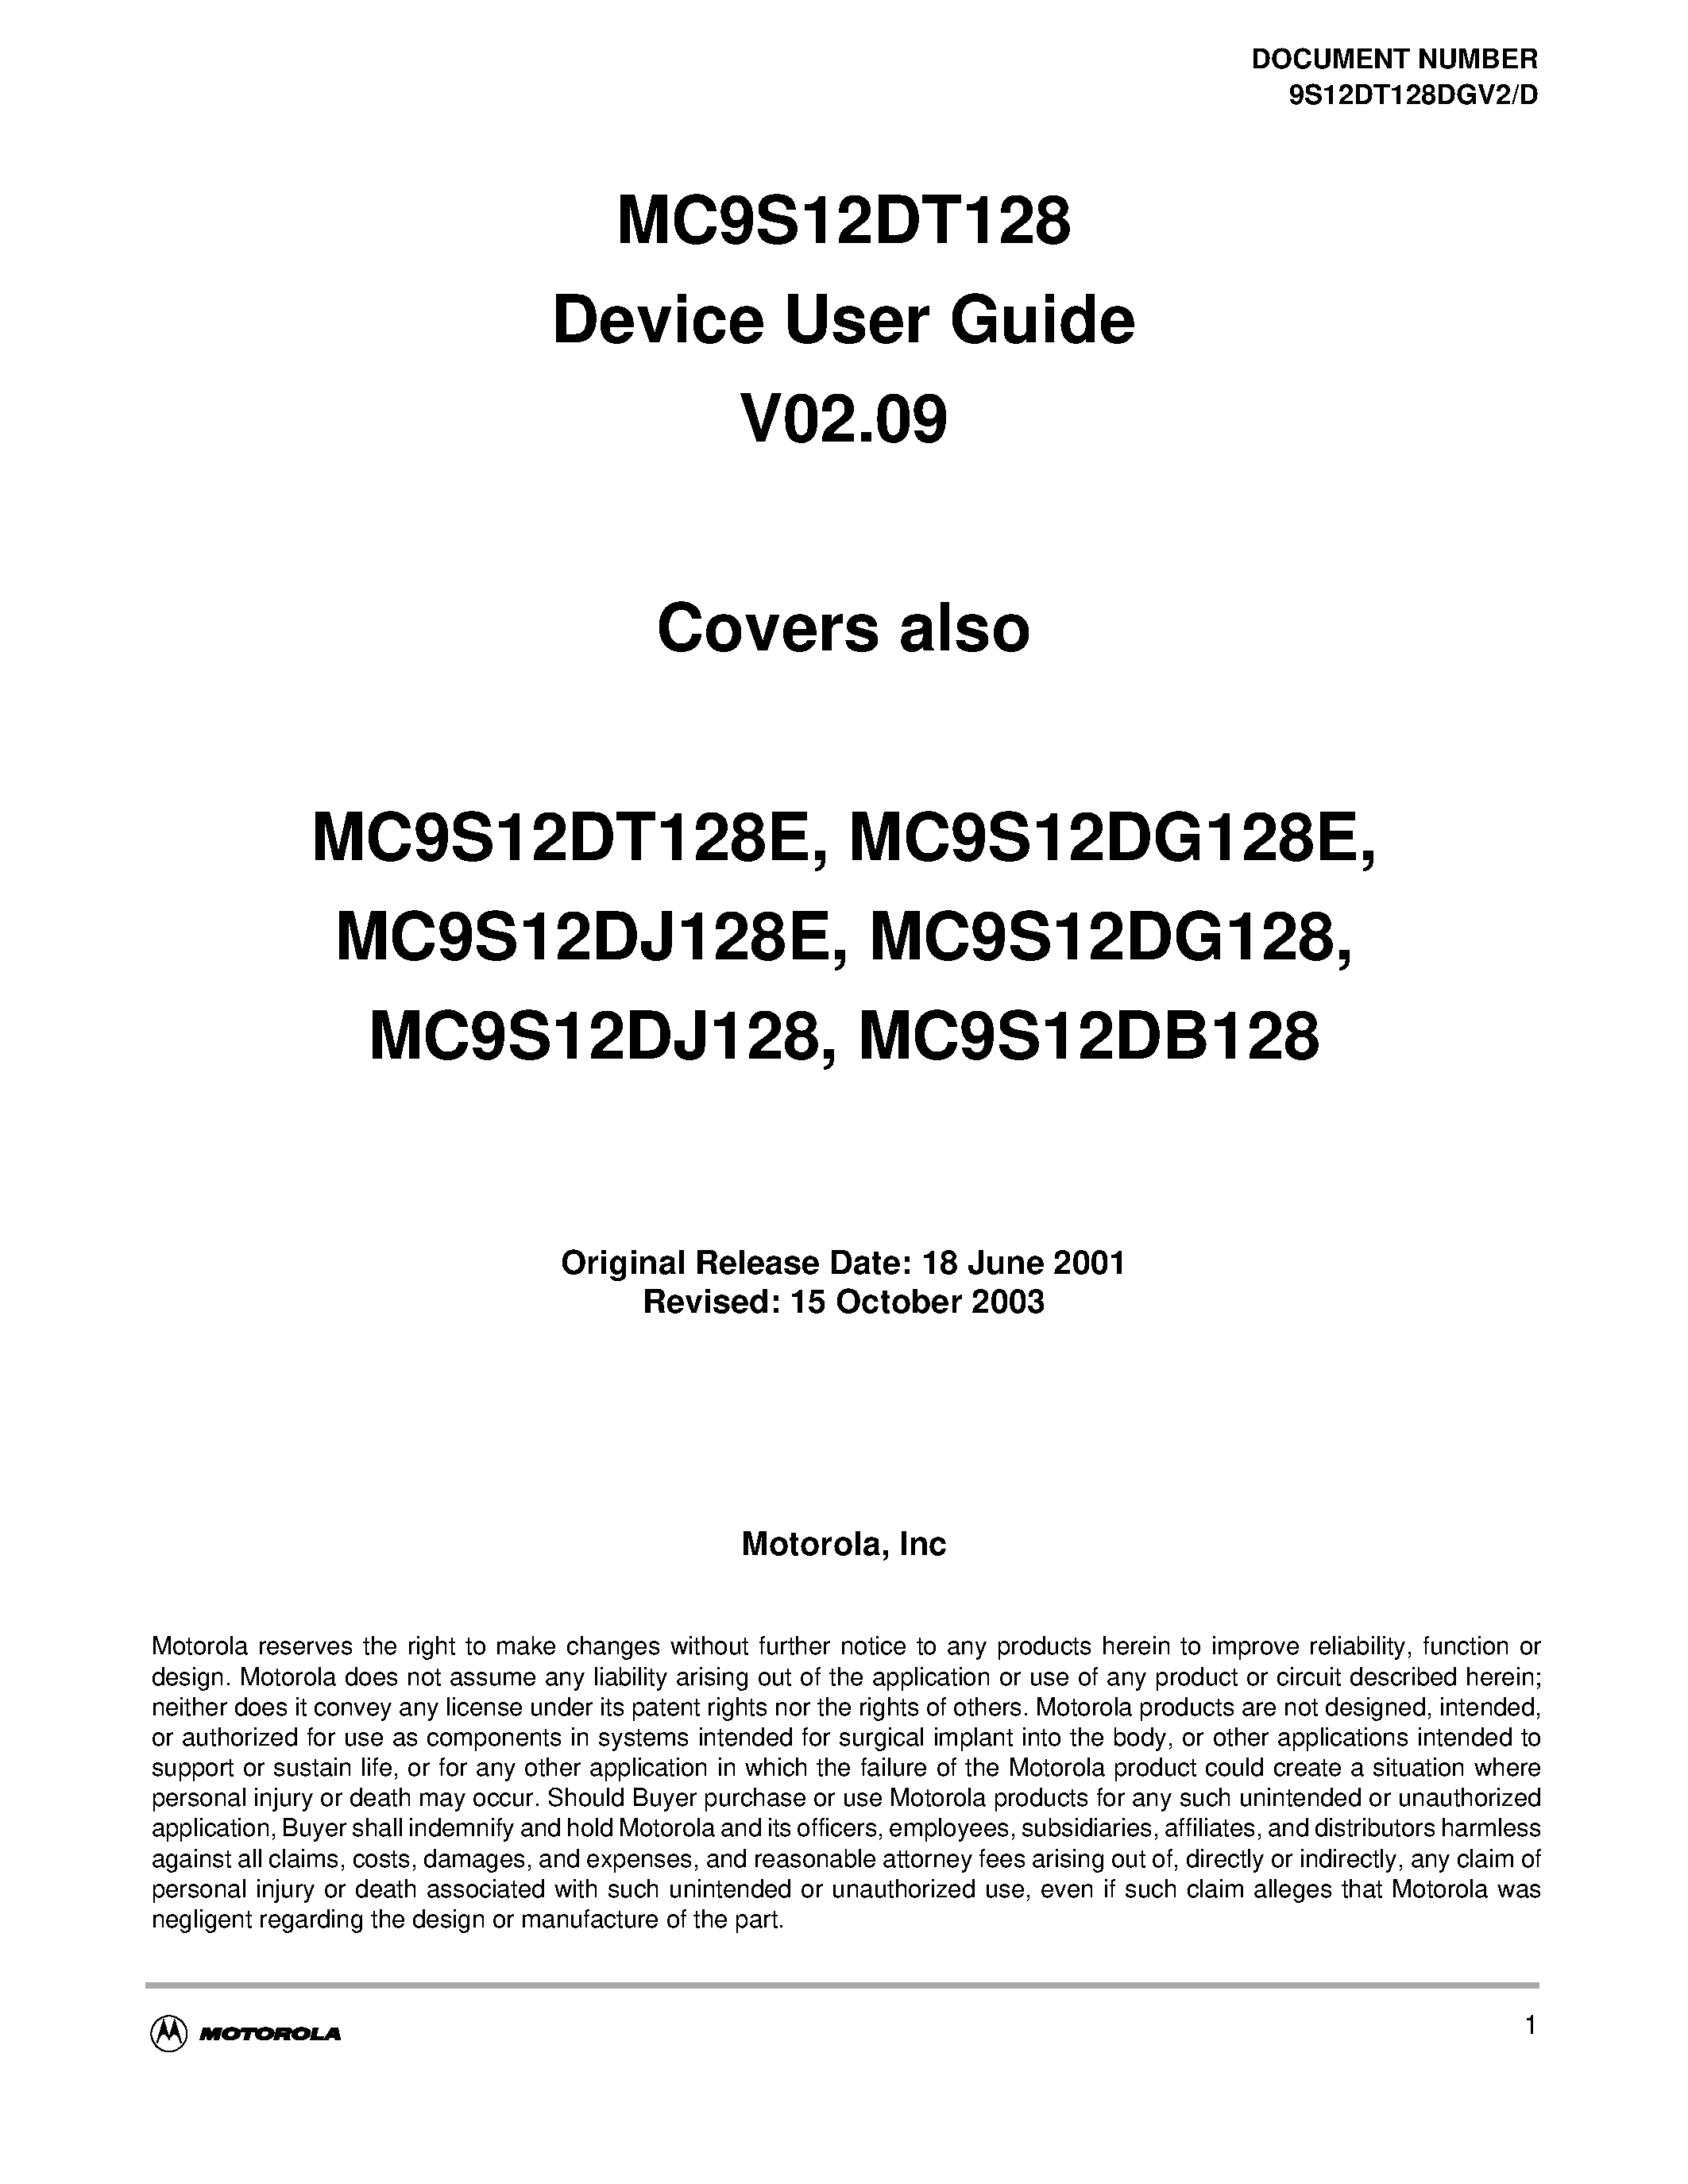 Даташит S12MMCV4 - MC9S12DT128 Device User Guide V02.09 страница 1